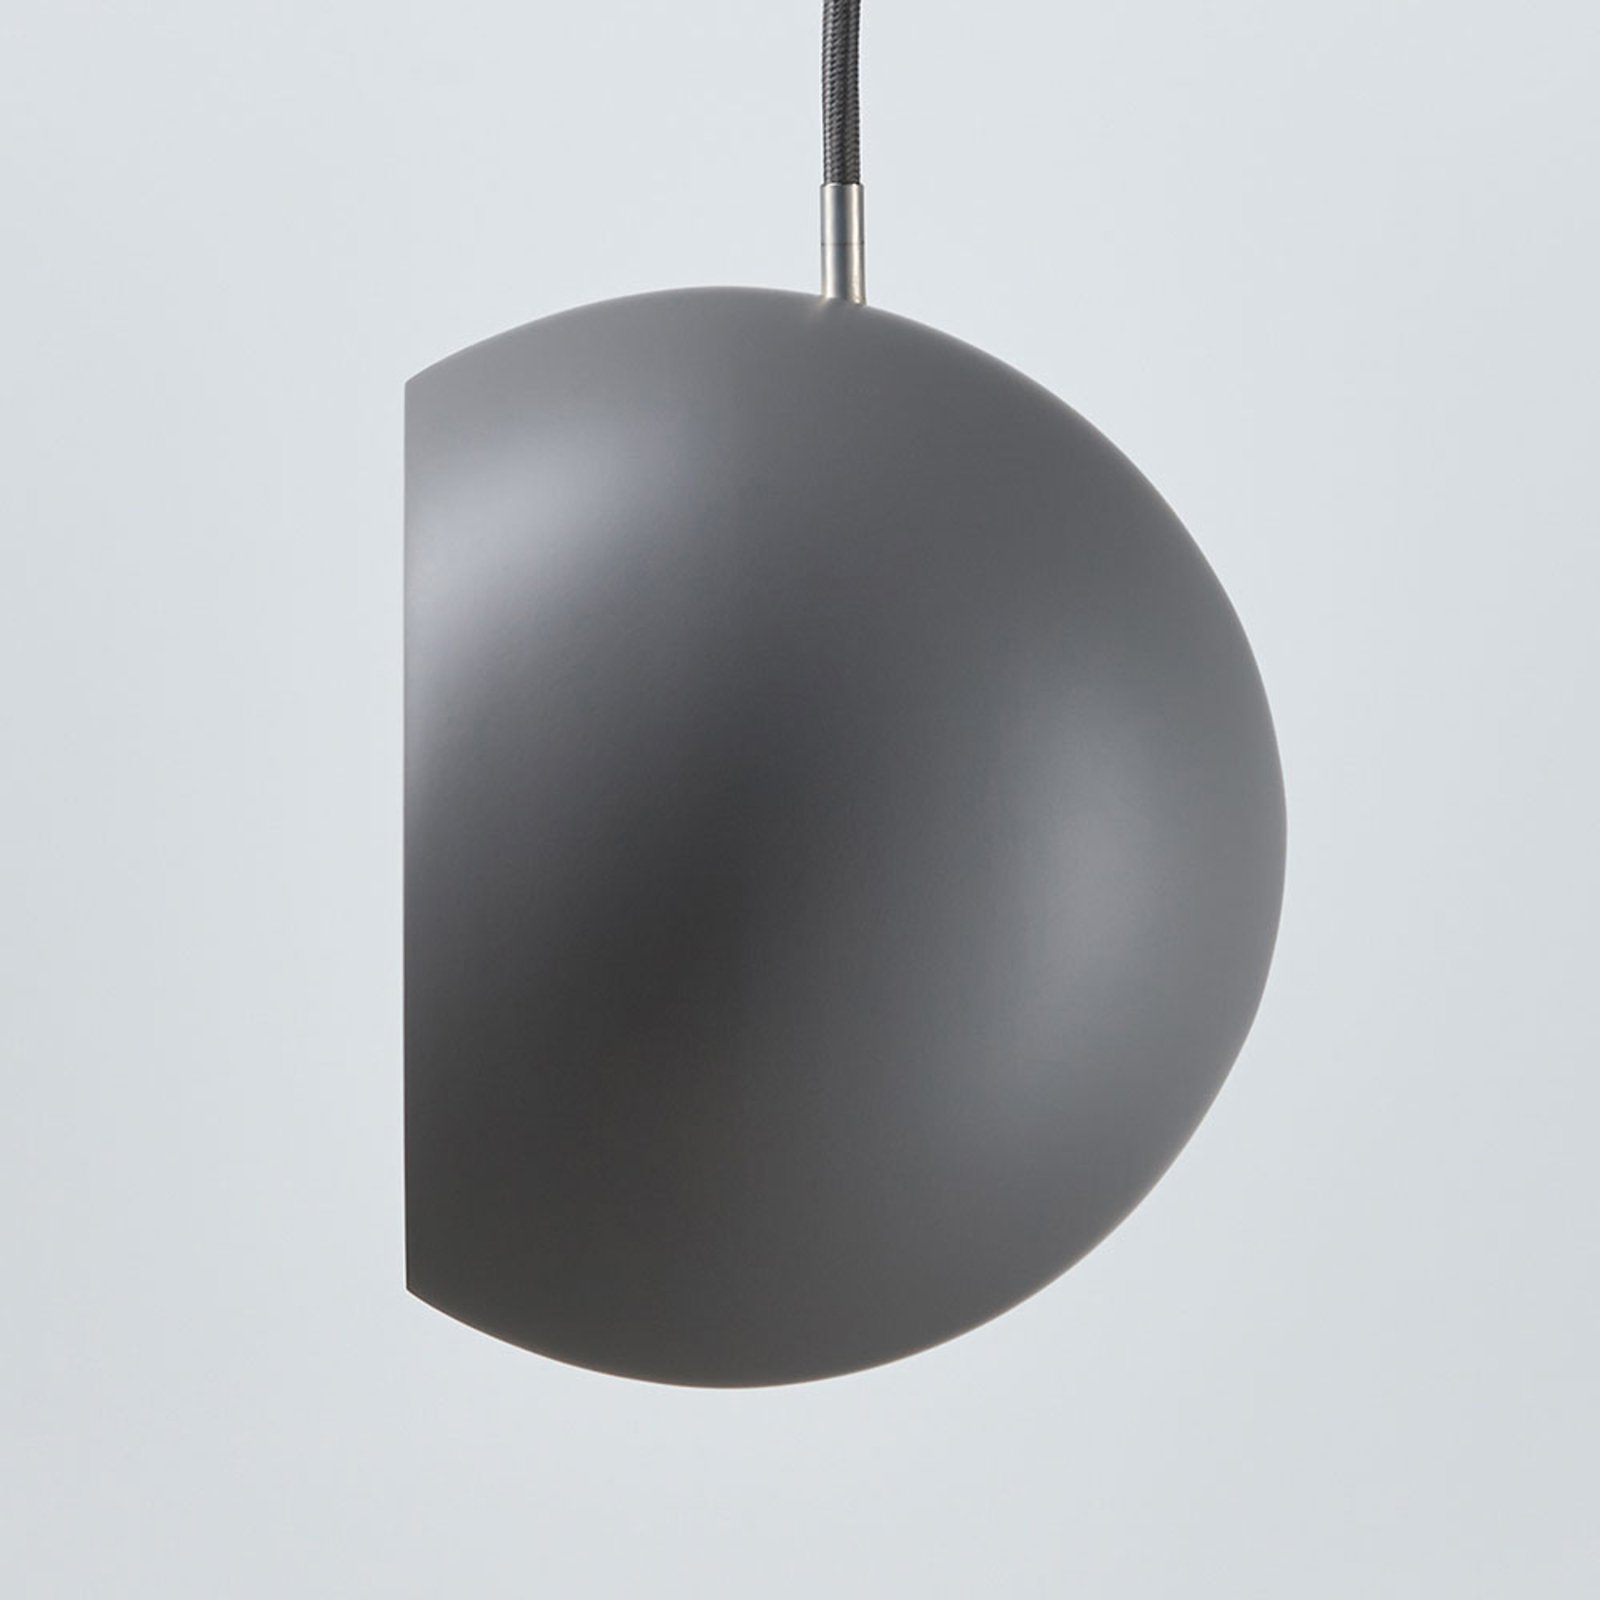 Nyta Tilt Globe hanglamp kabel 3m grijs grijs